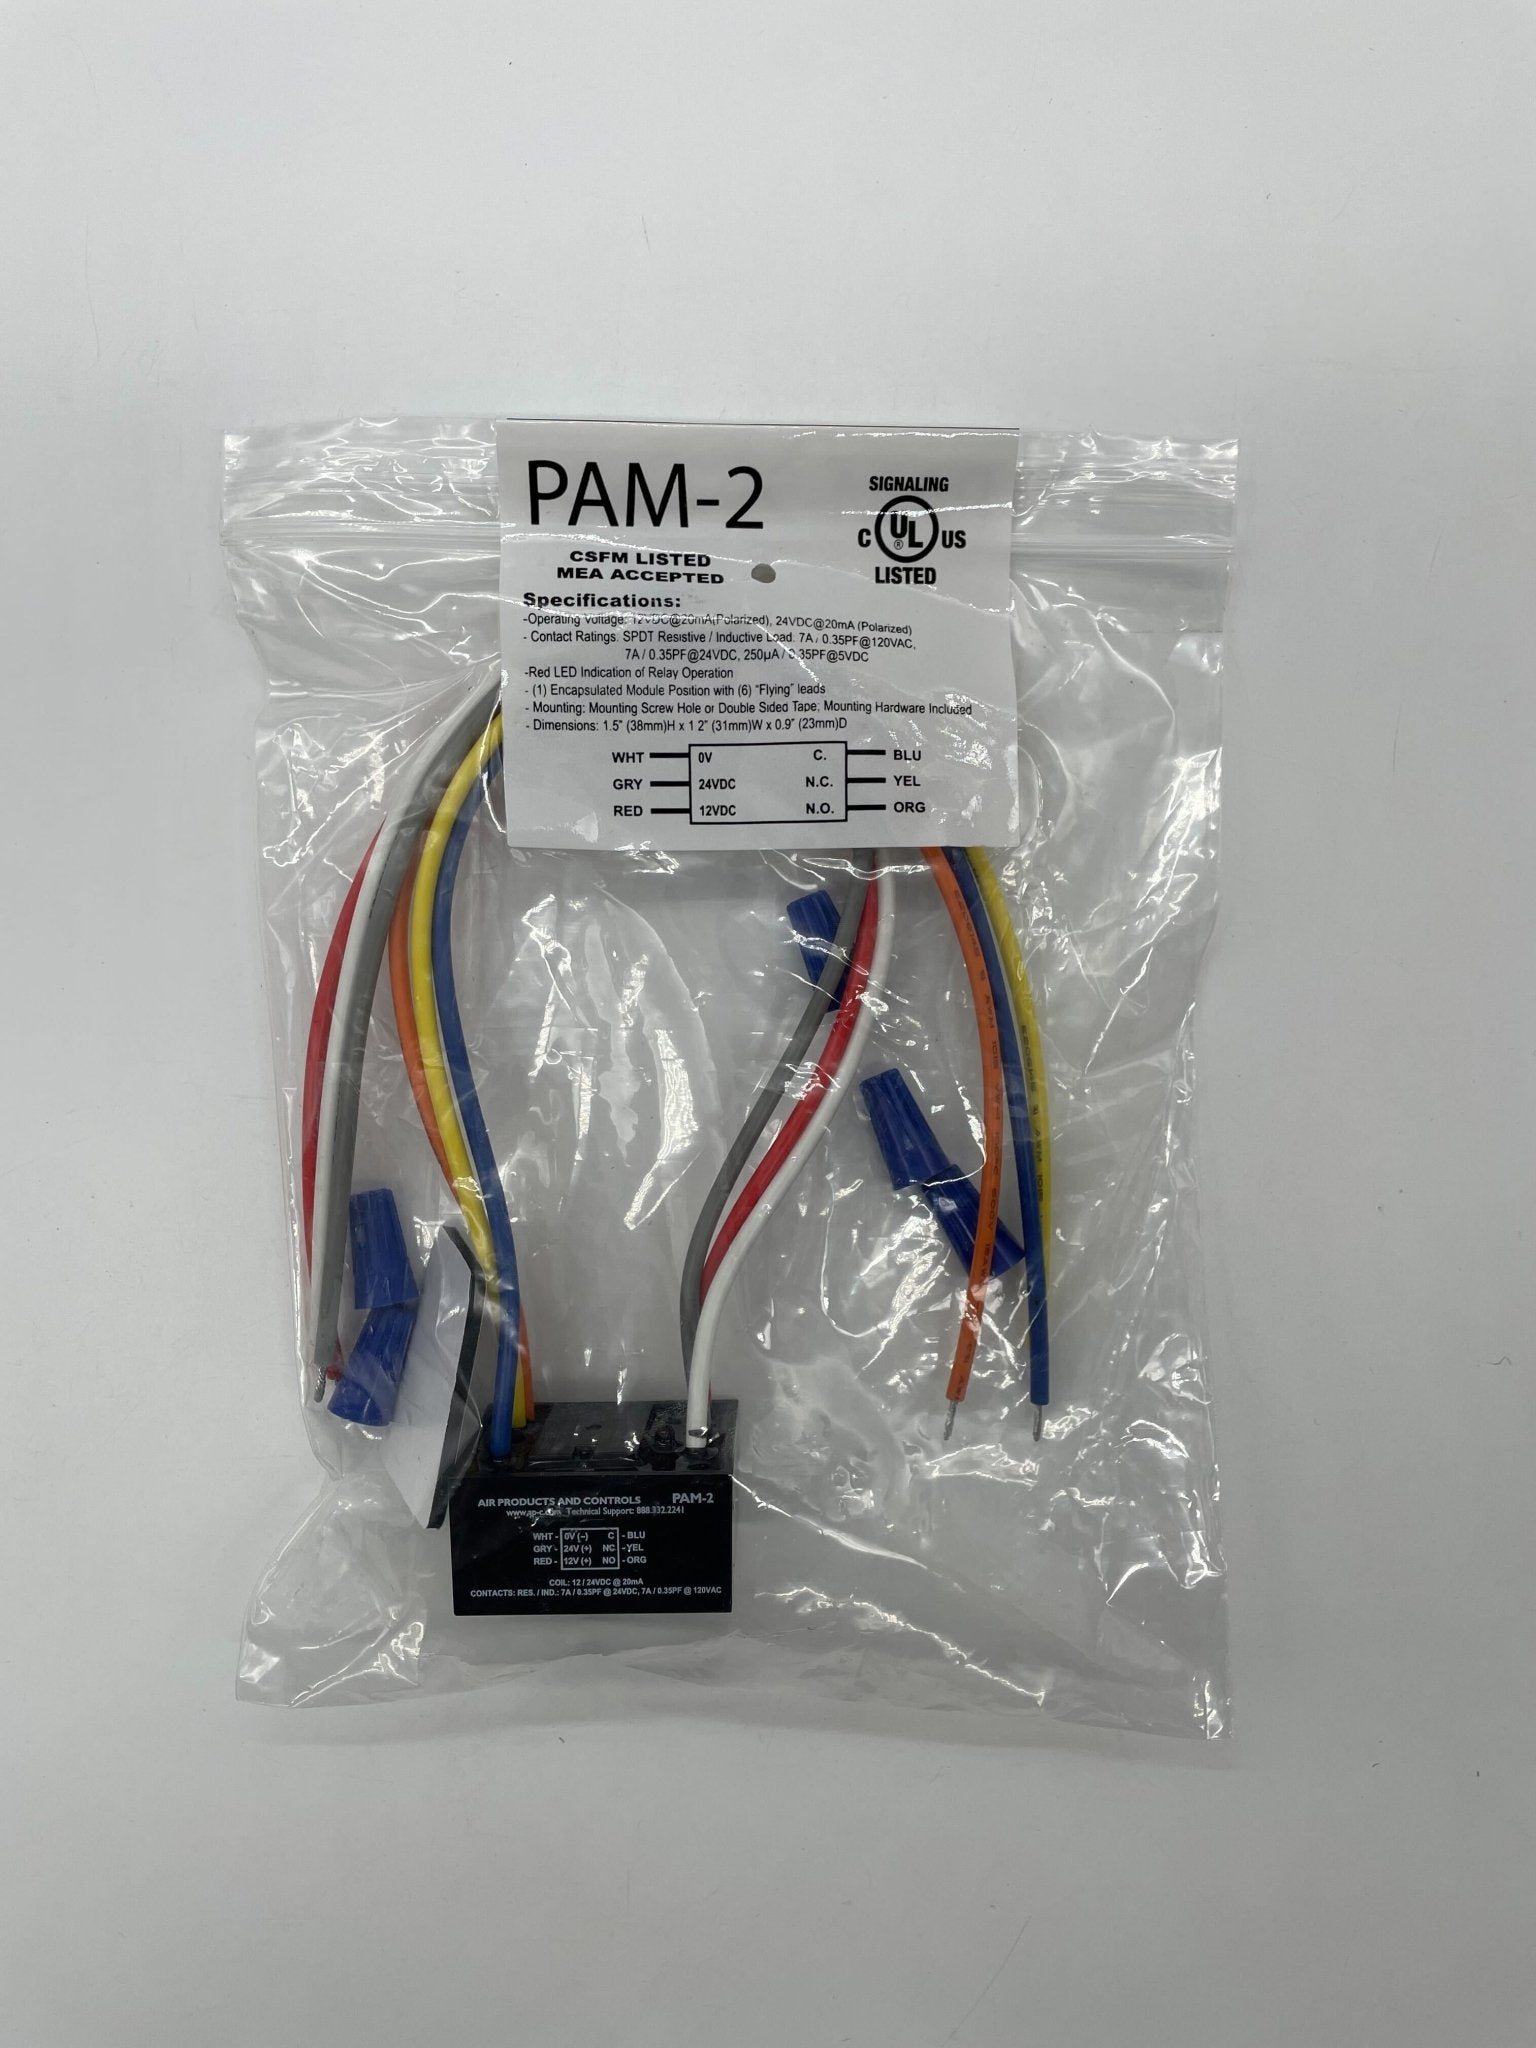 Firelite PAM-2 - The Fire Alarm Supplier